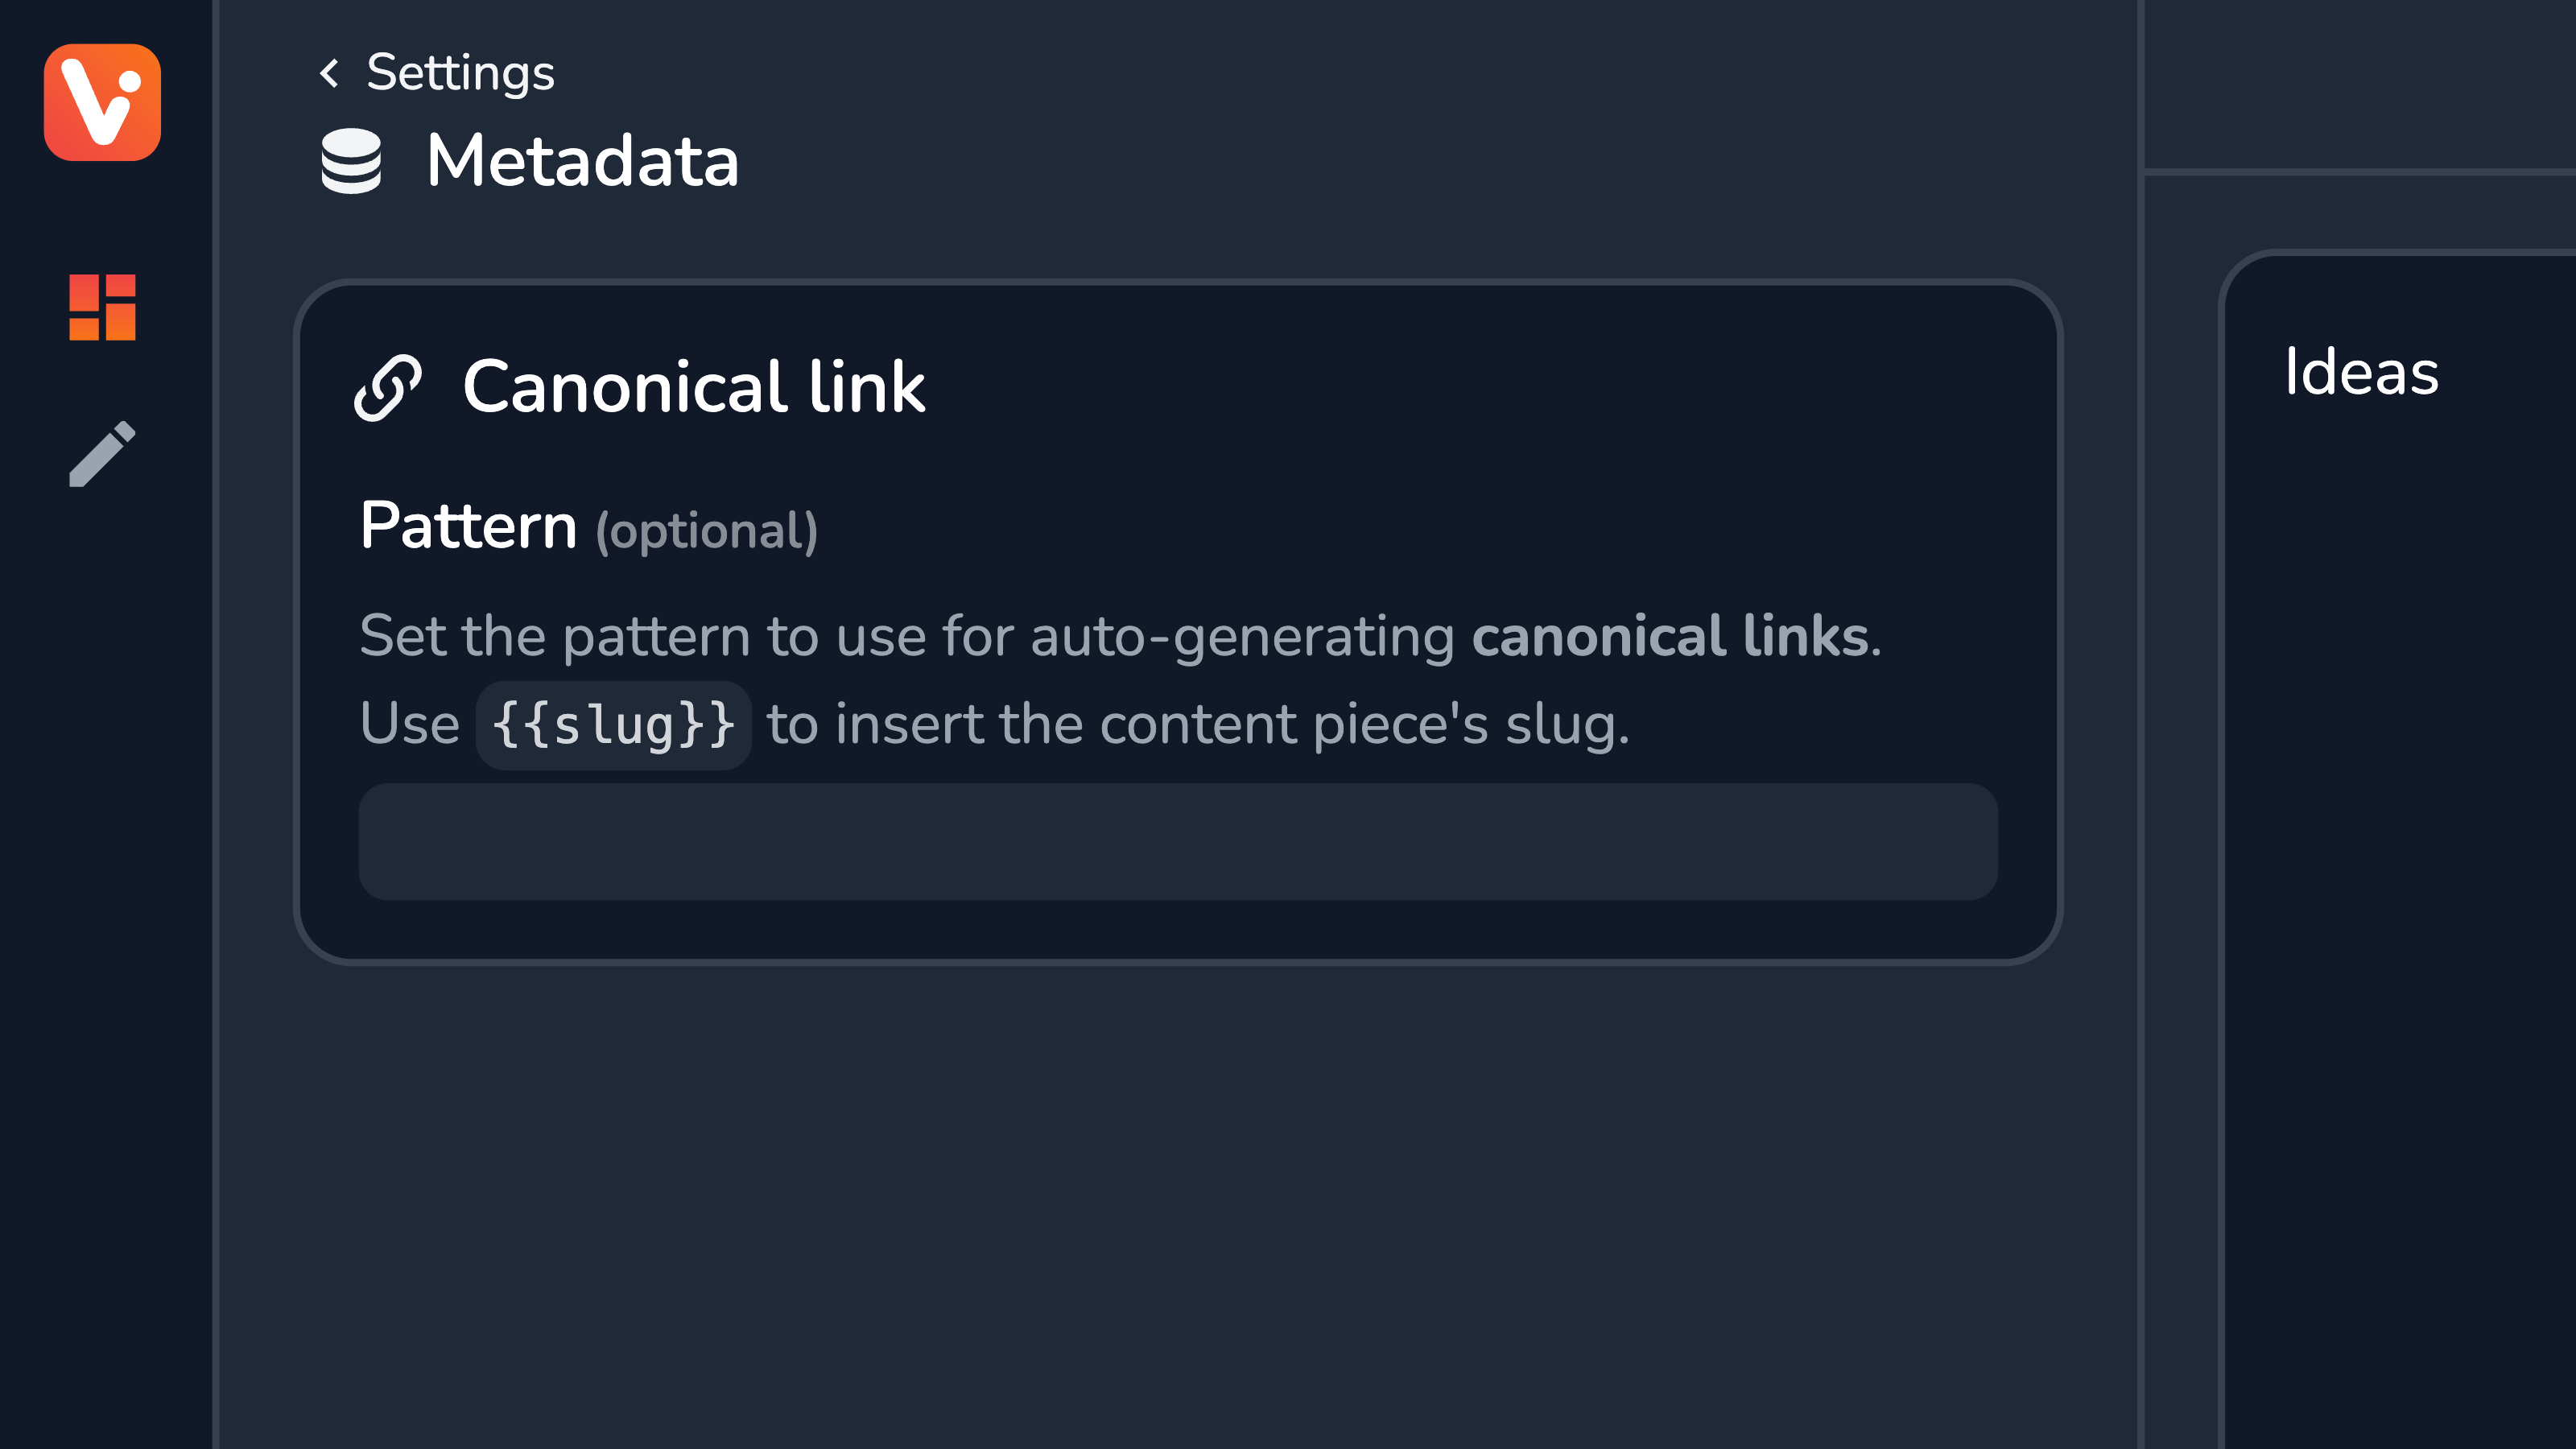 Metadata settings section